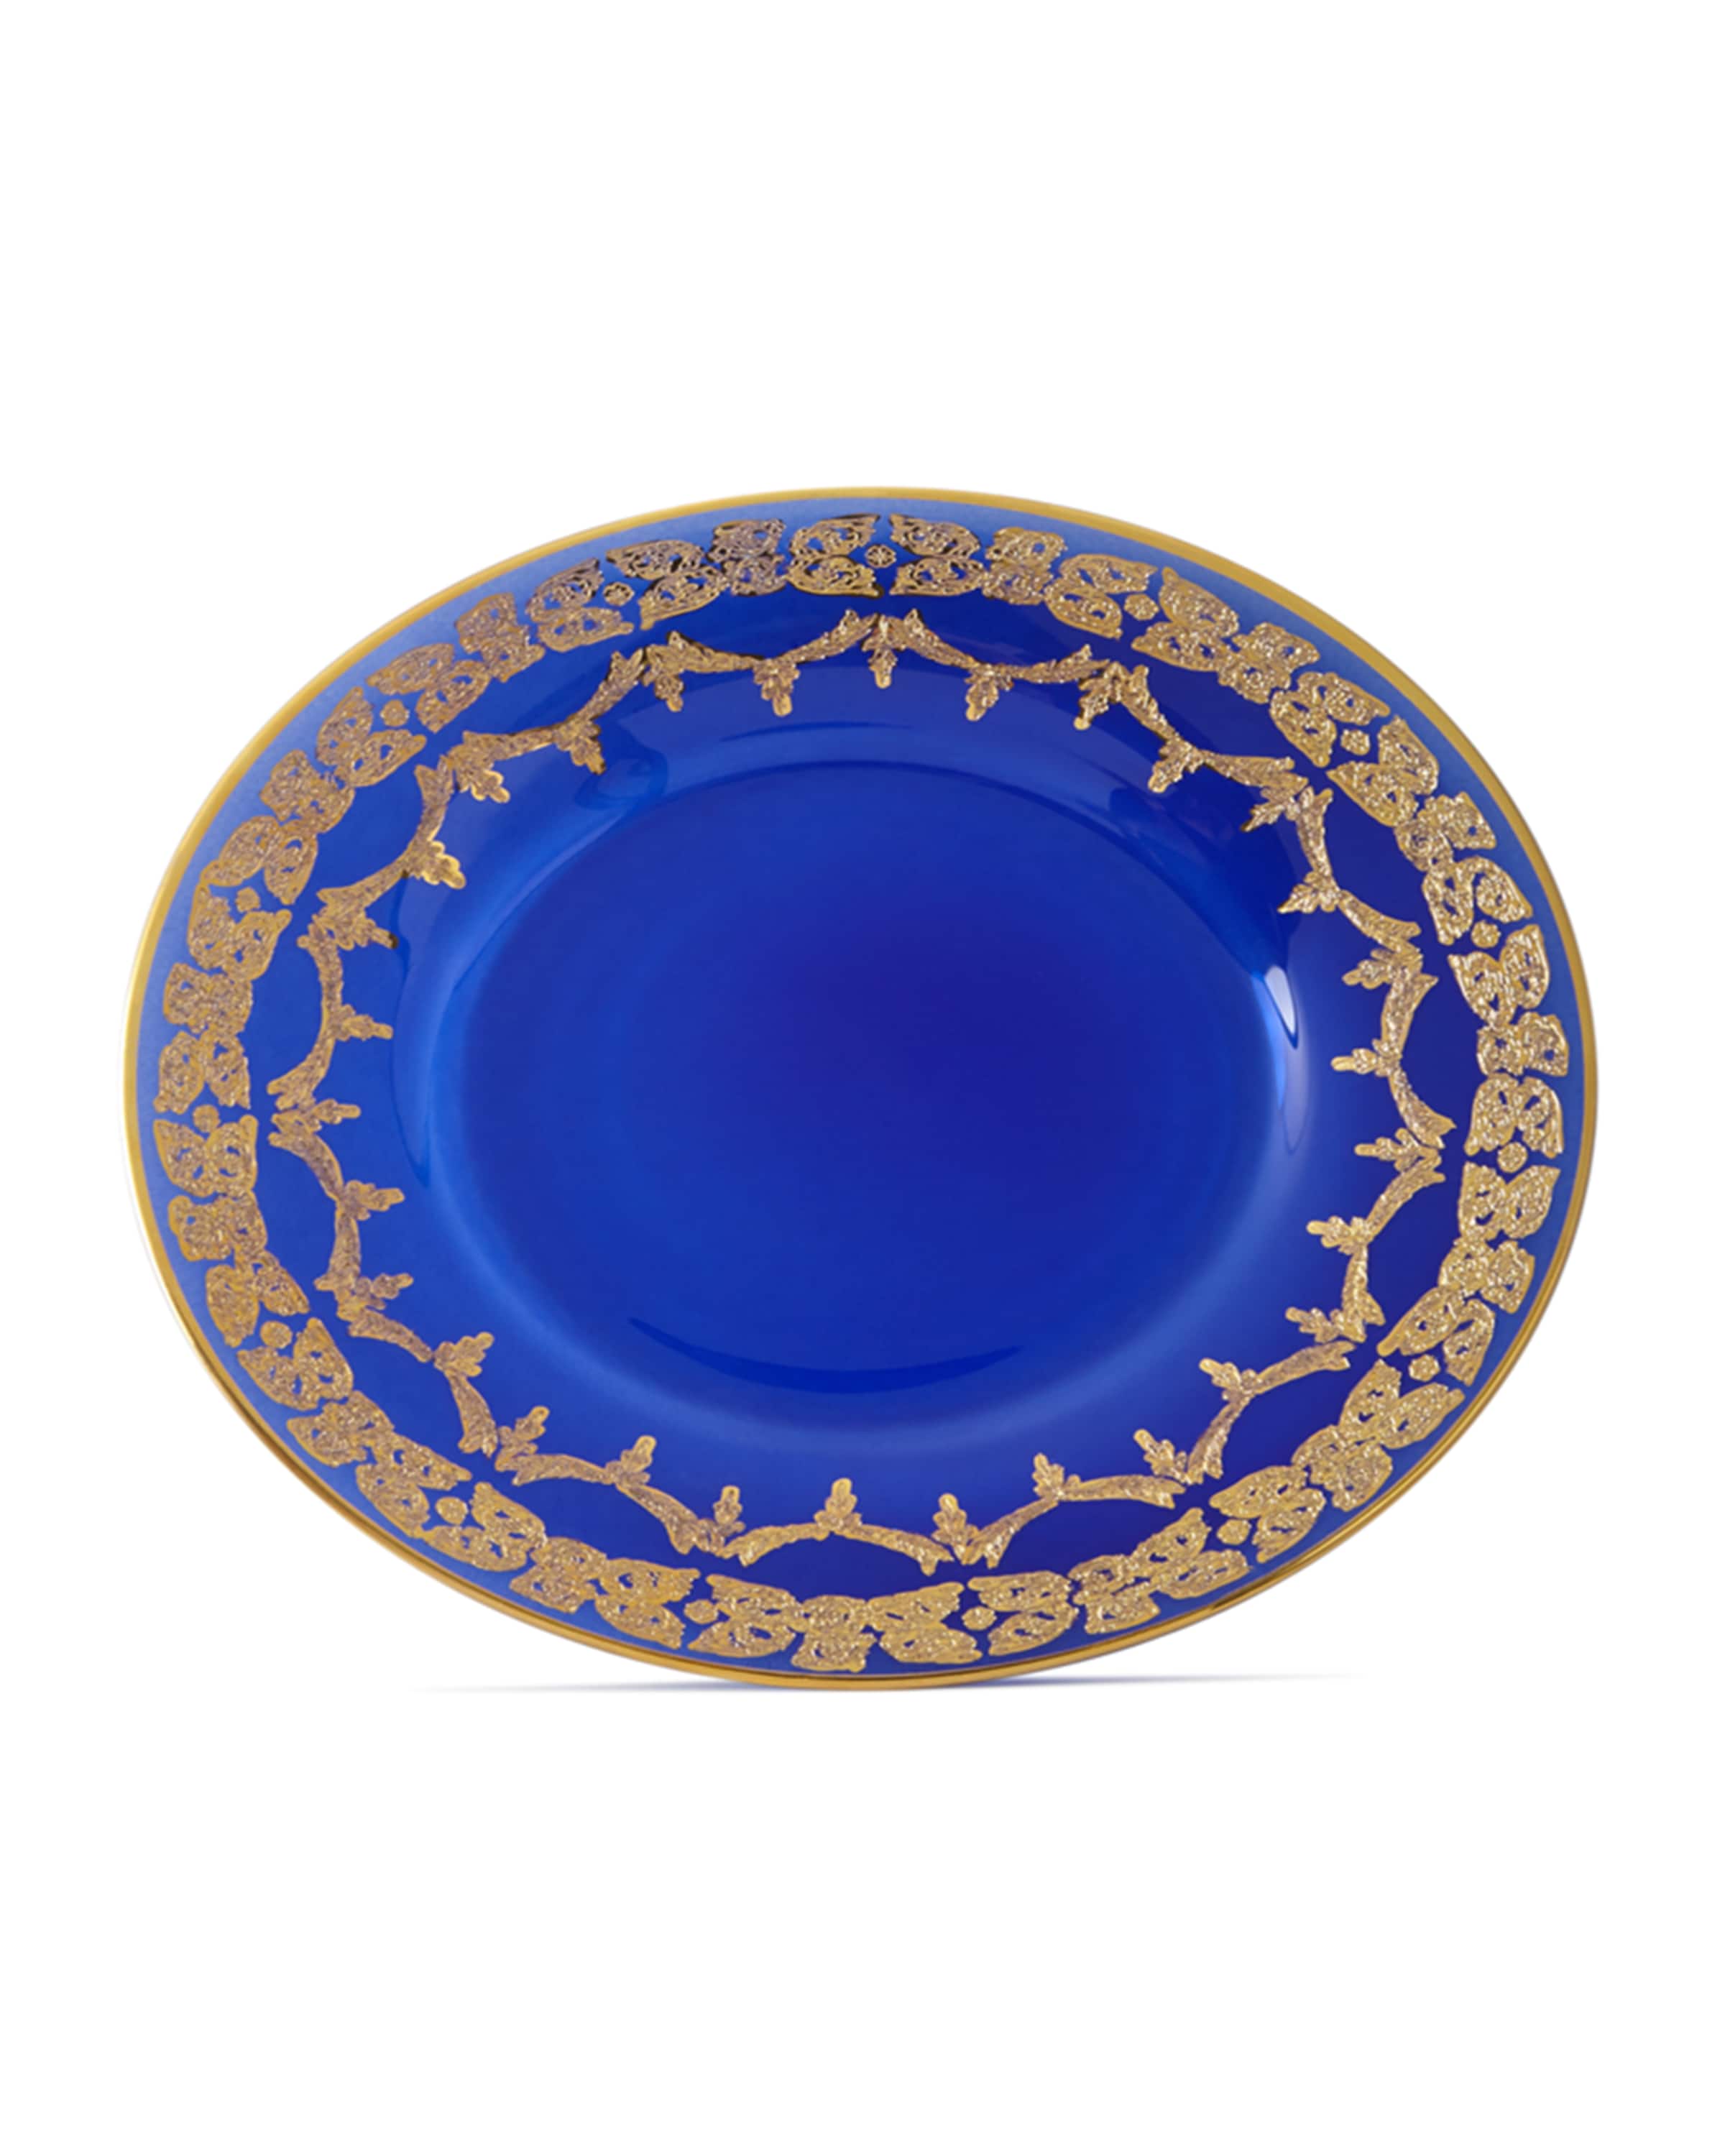 Neiman Marcus Blue Oro Bello Dessert Plates, Set of 4